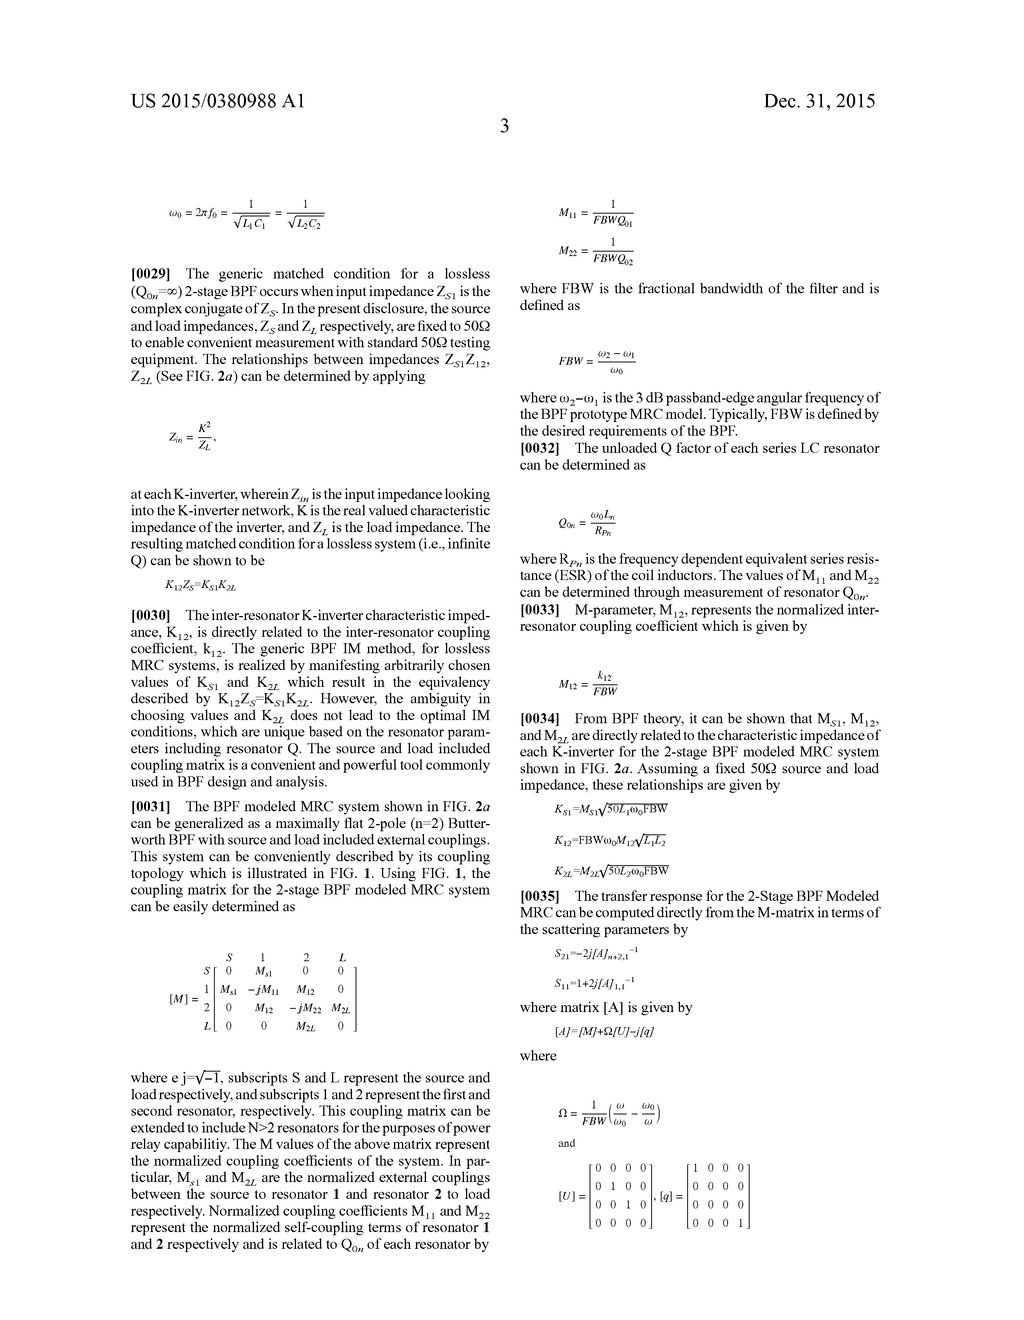 MAGNETIC RESONANCE COUPLING ARRANGEMENT - diagram, schematic, and image 15